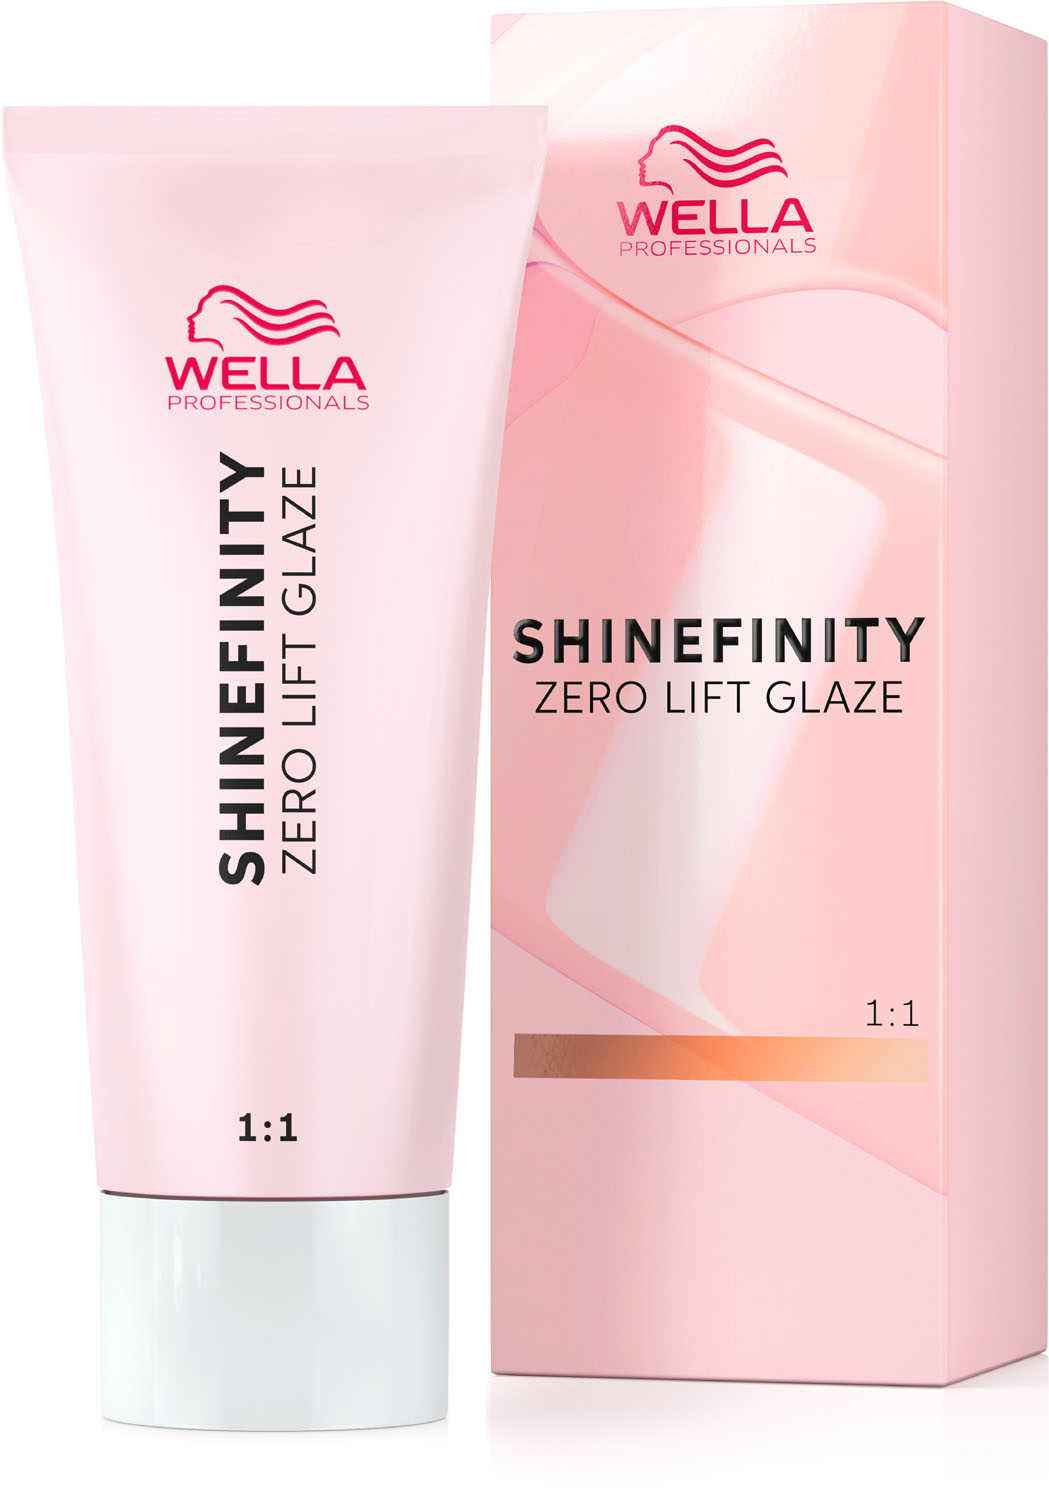  Wella Shinefinity Zero Lift Glazes 08/38 Honey Latte 